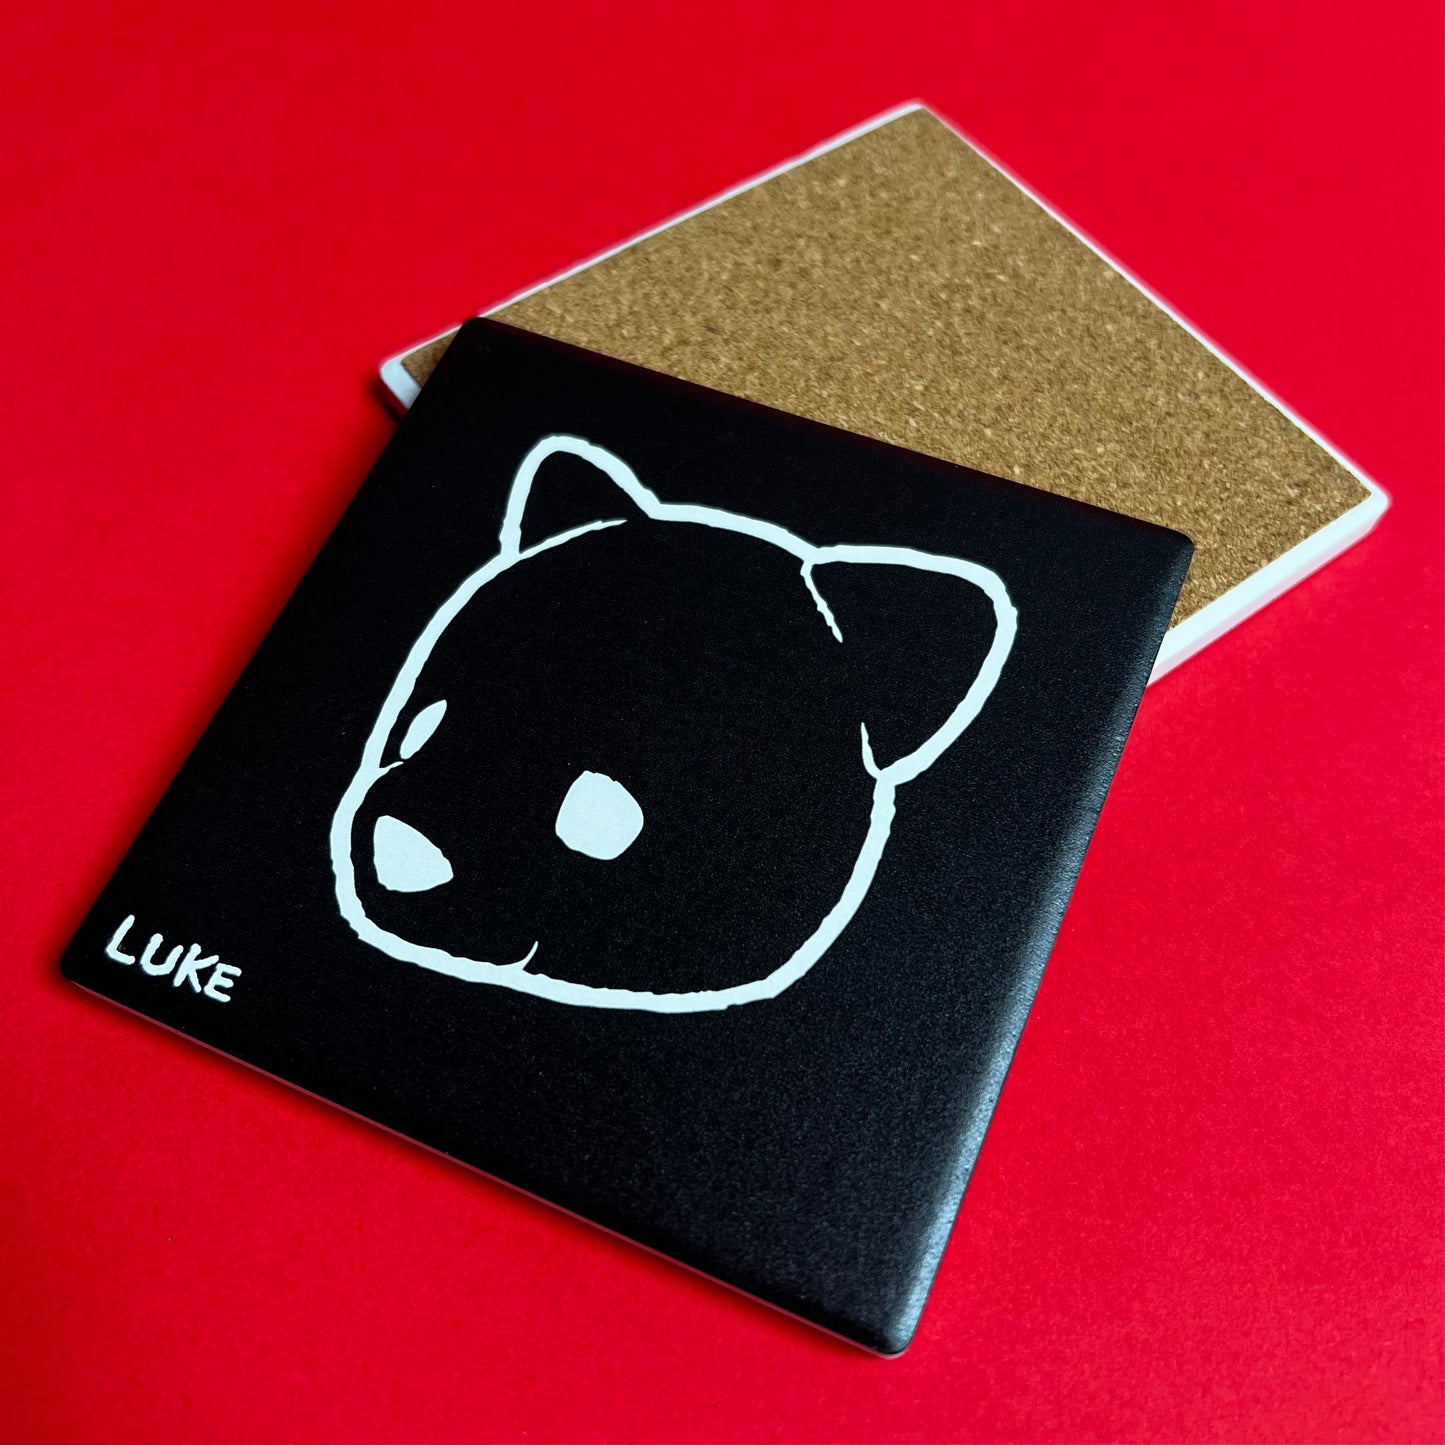 02.019: Bear Logo Ceramic Coaster - "Noir Edition" by Luke Chueh